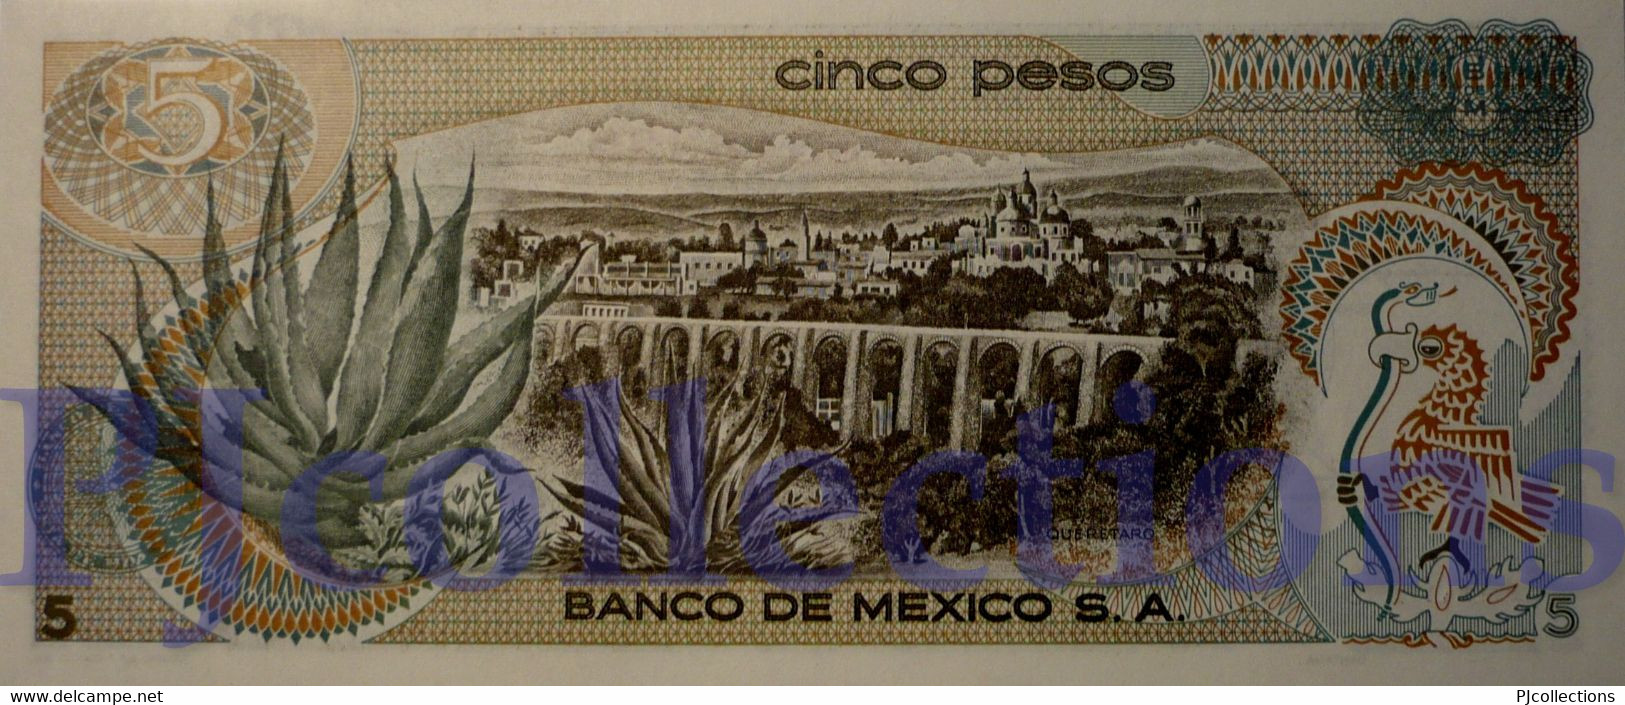 MEXICO 5 PESOS 1972 PICK 62c UNC - Mexico